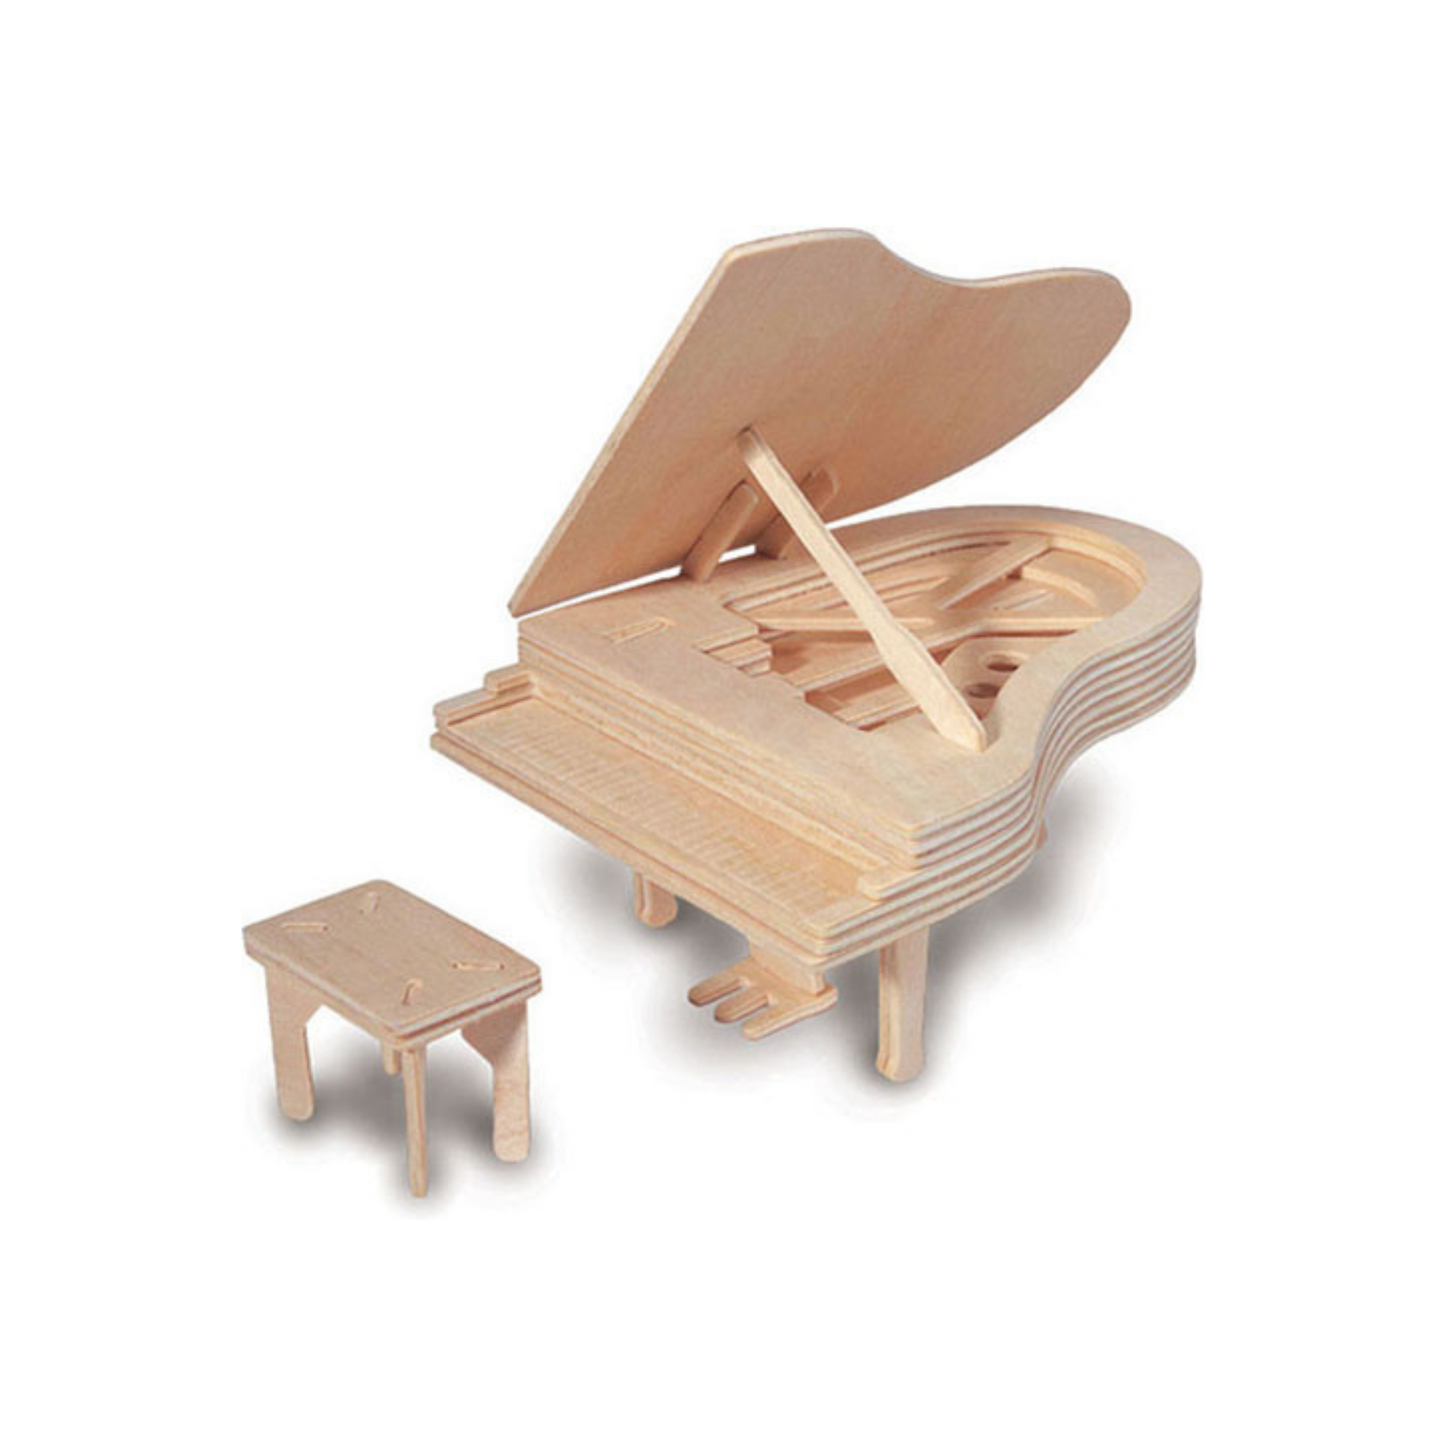 Quay Piano Woodcraft Construction Kit